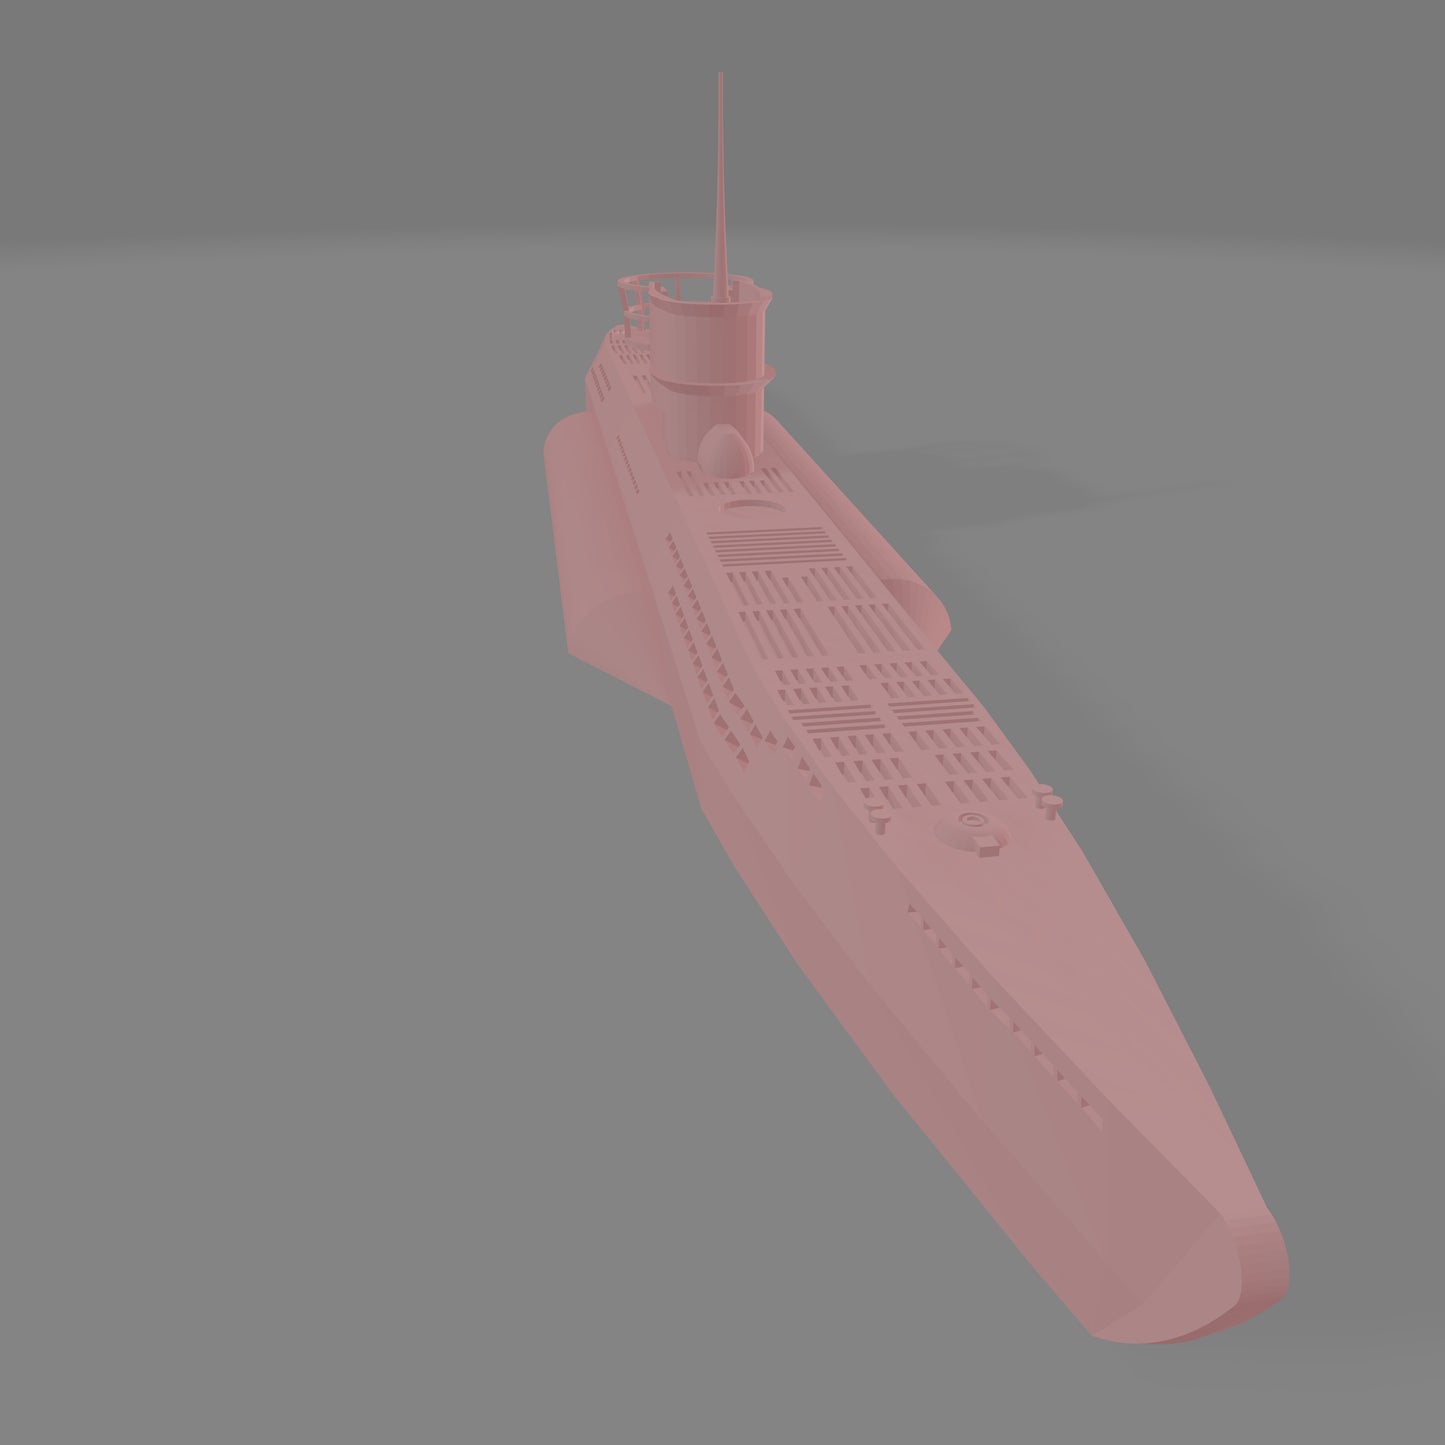 German U-Boat Type 7 - Commissioned